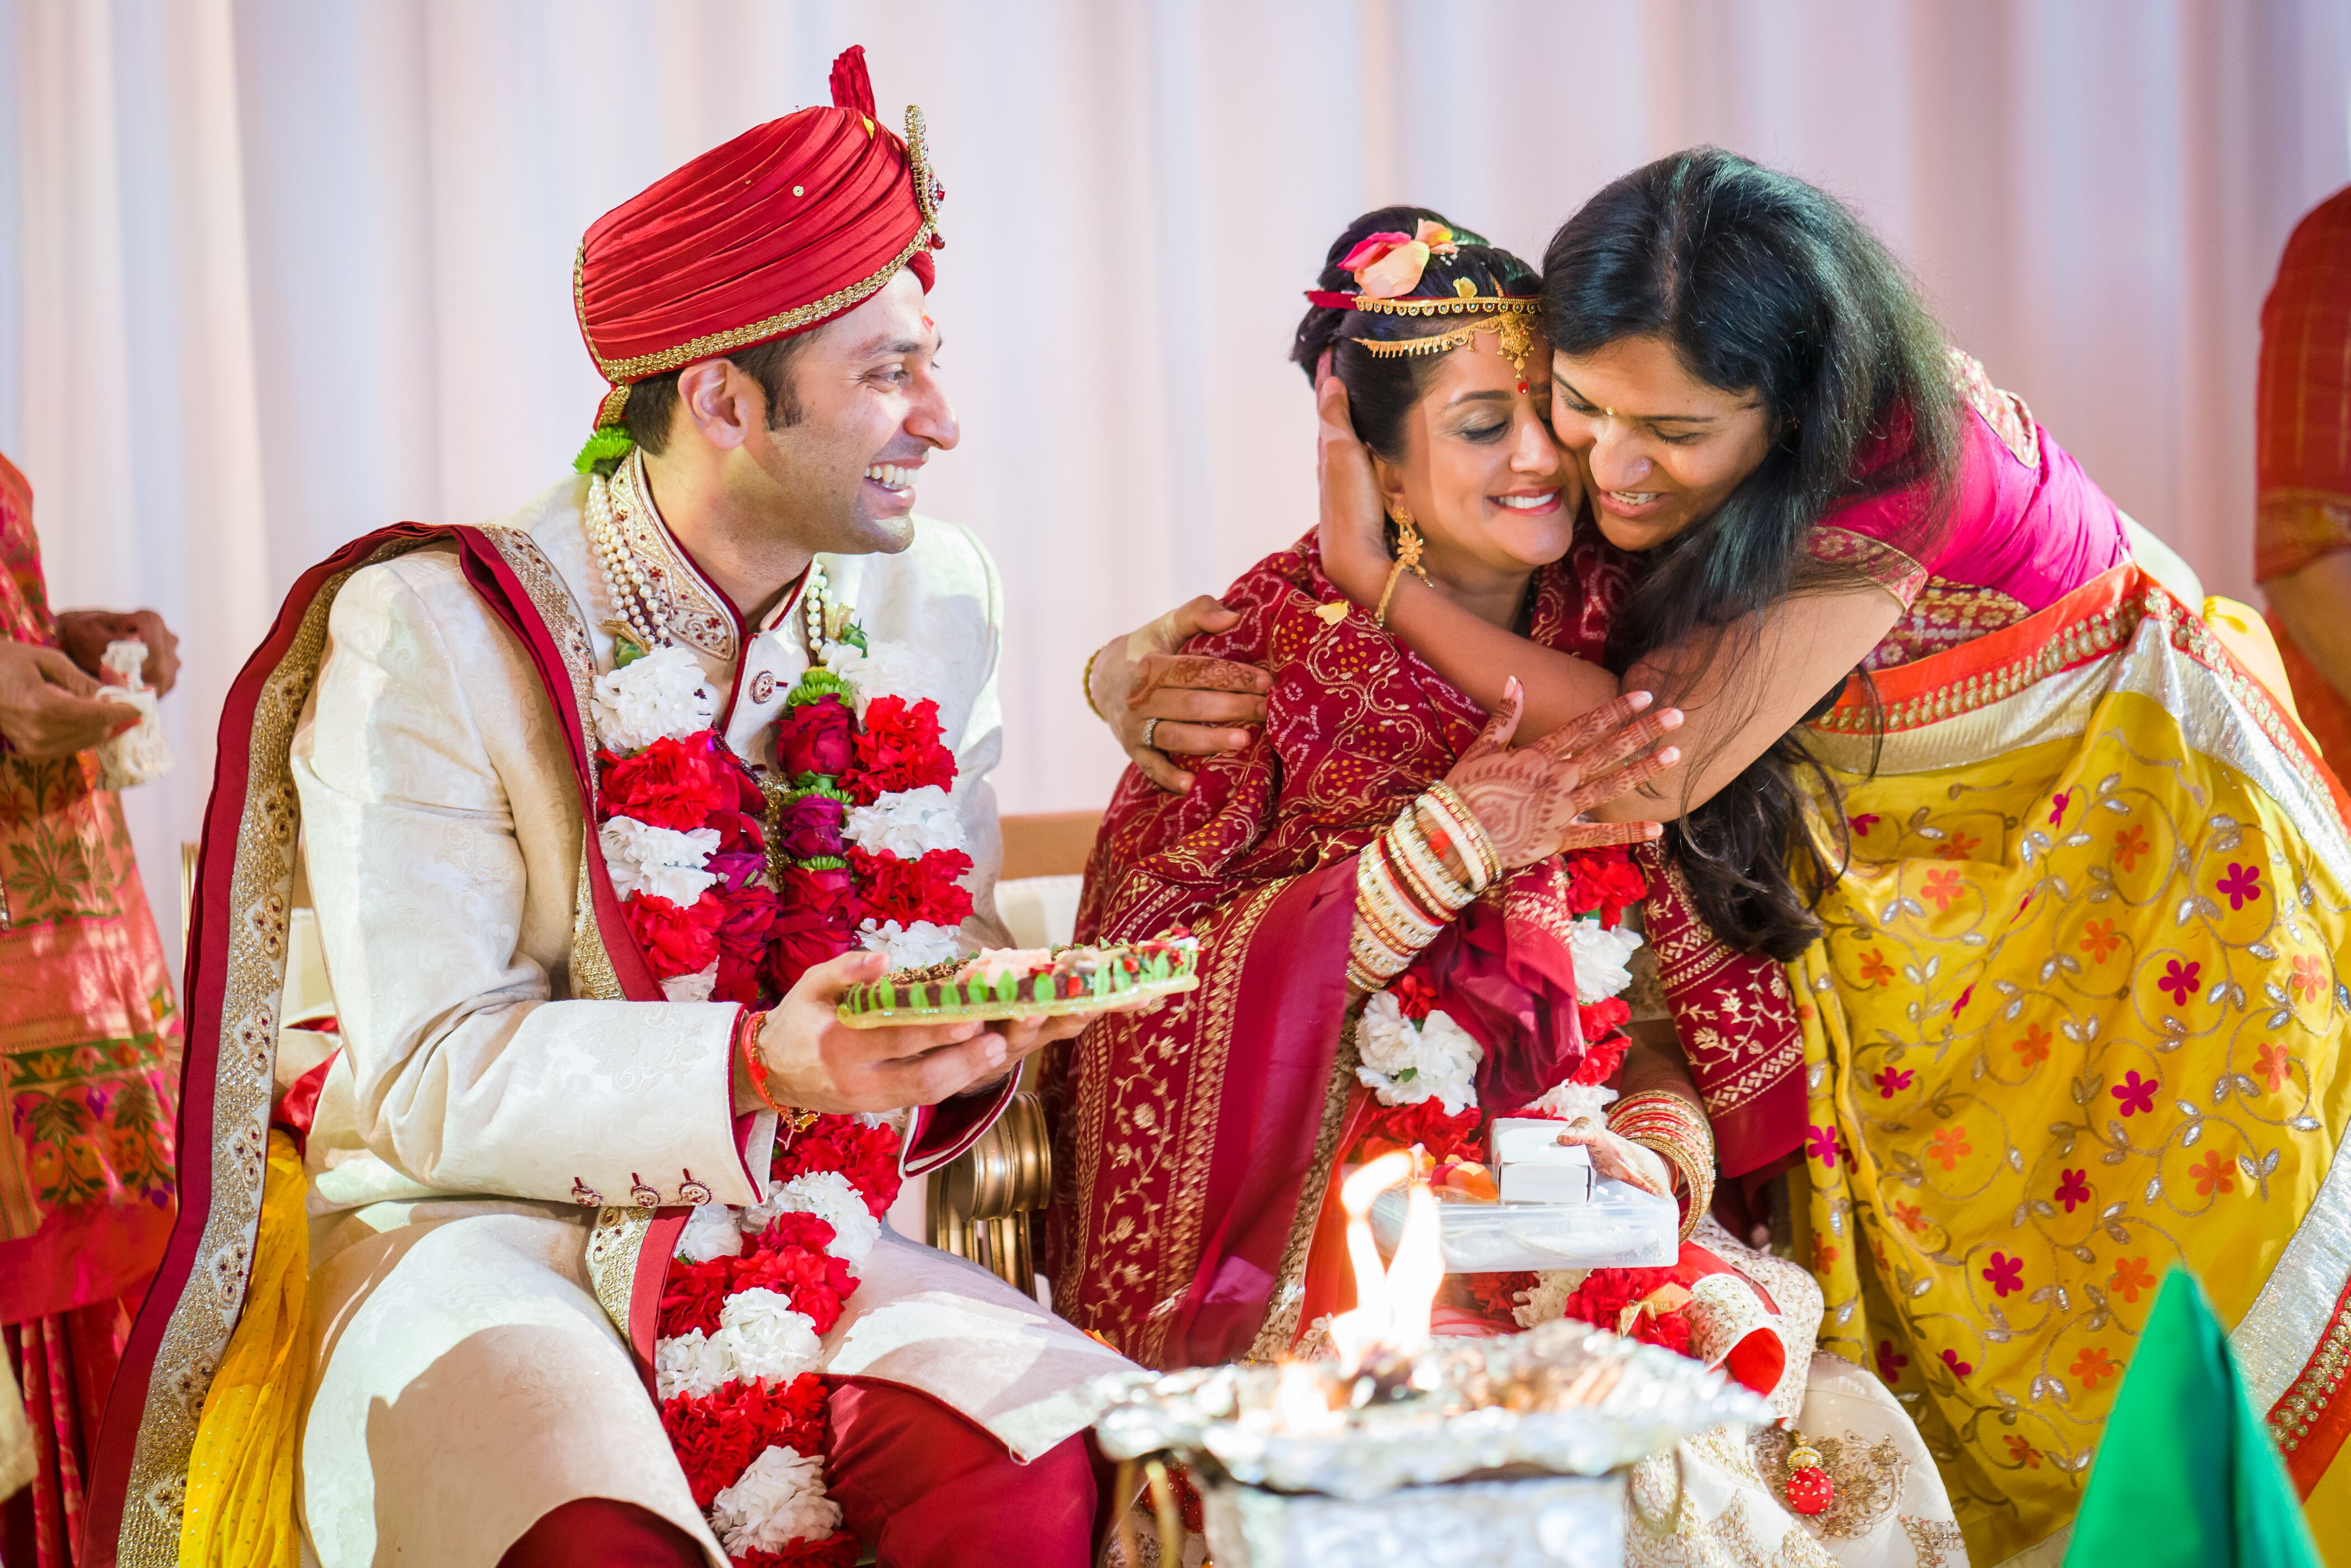 Indian Wedding Ceremony Traditions 14 Hindu Wedding Ceremony Traditions You Need To Know The